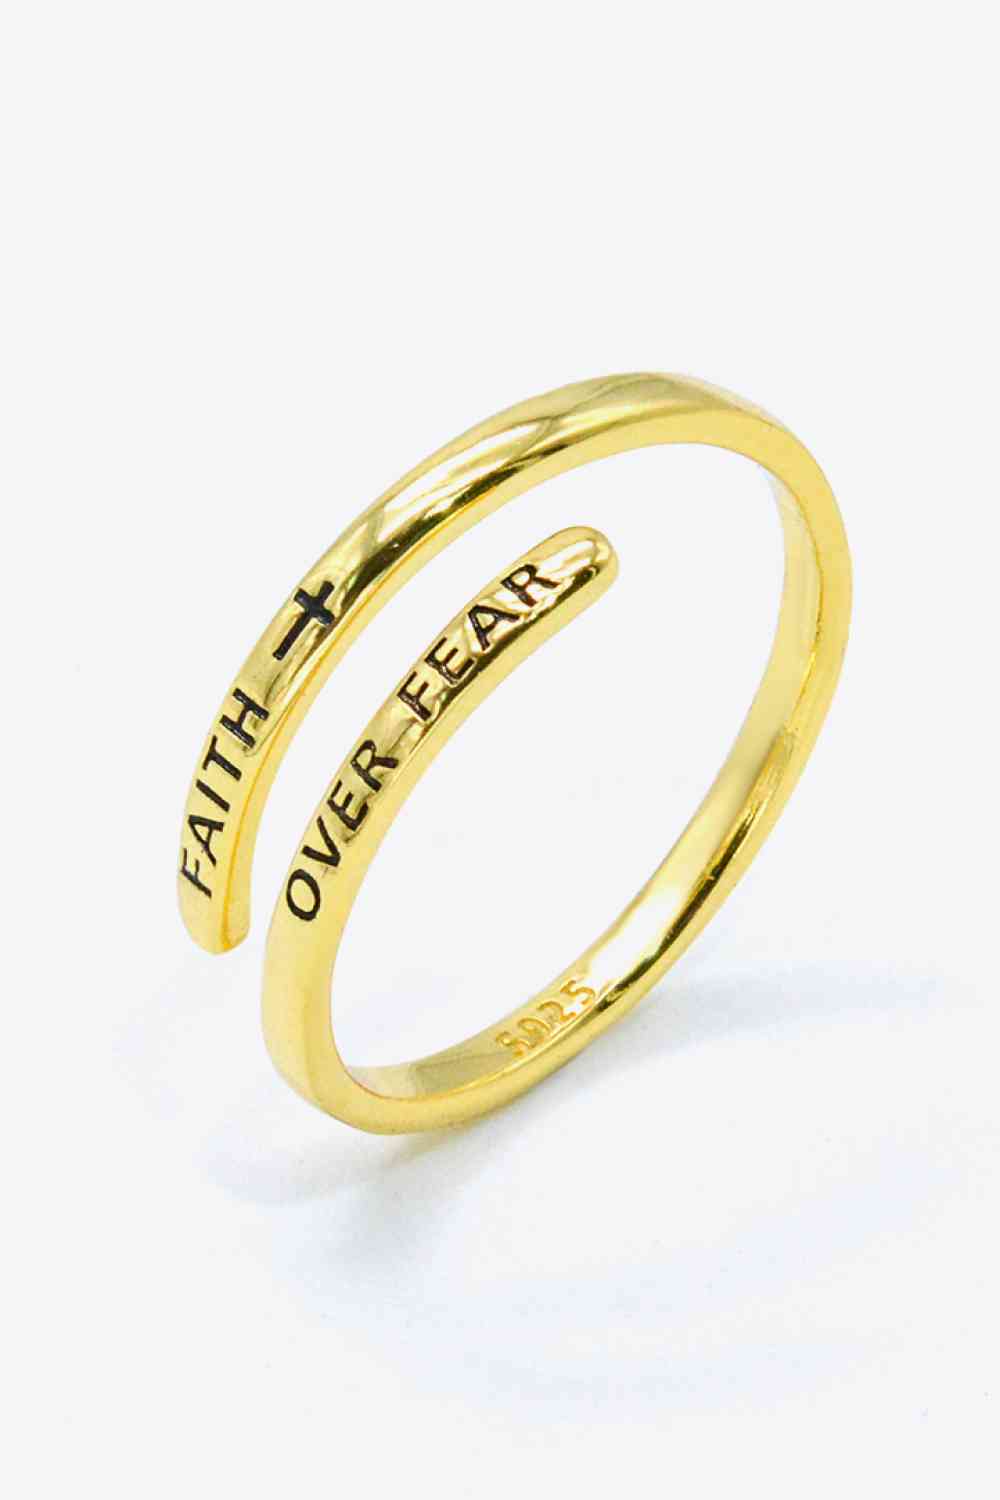 FAITH OVER FEAR Bypass Ring - Everyday-Sales.com